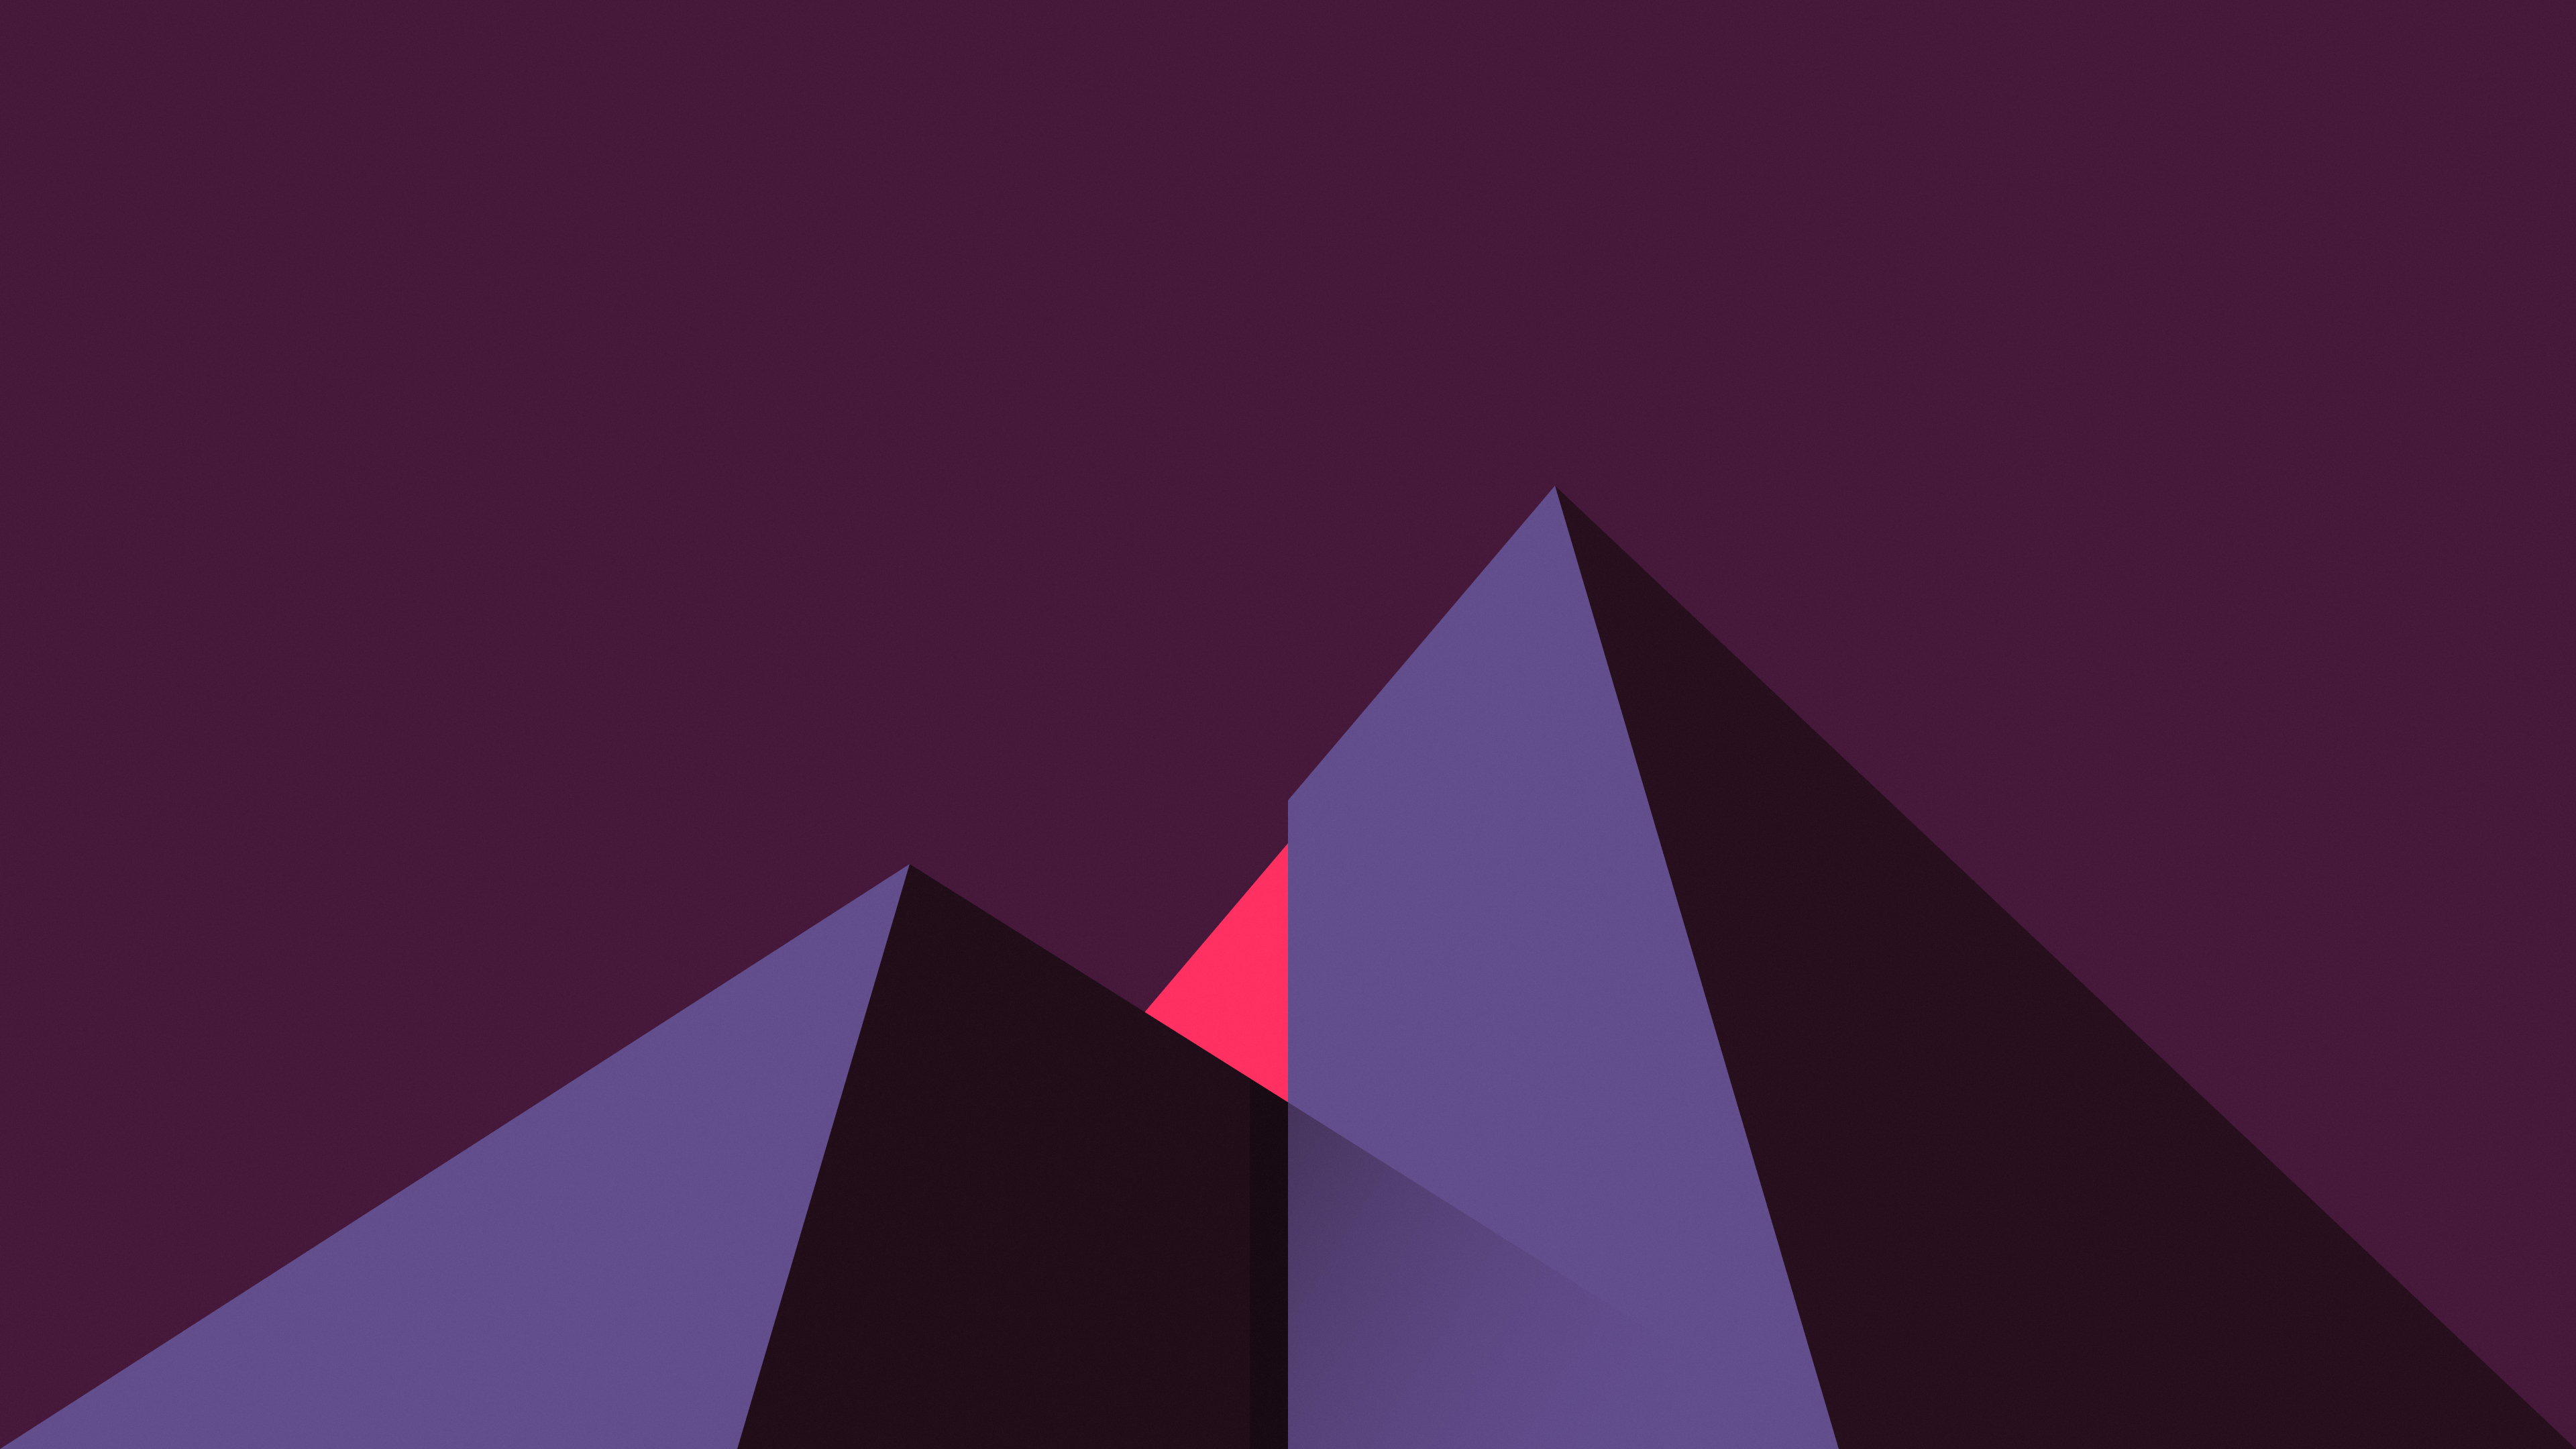 Digital Art Artwork Illustration Minimalism Mountains Flat Art Pyramid Abstract Shapes Purple RBatin 3840x2160